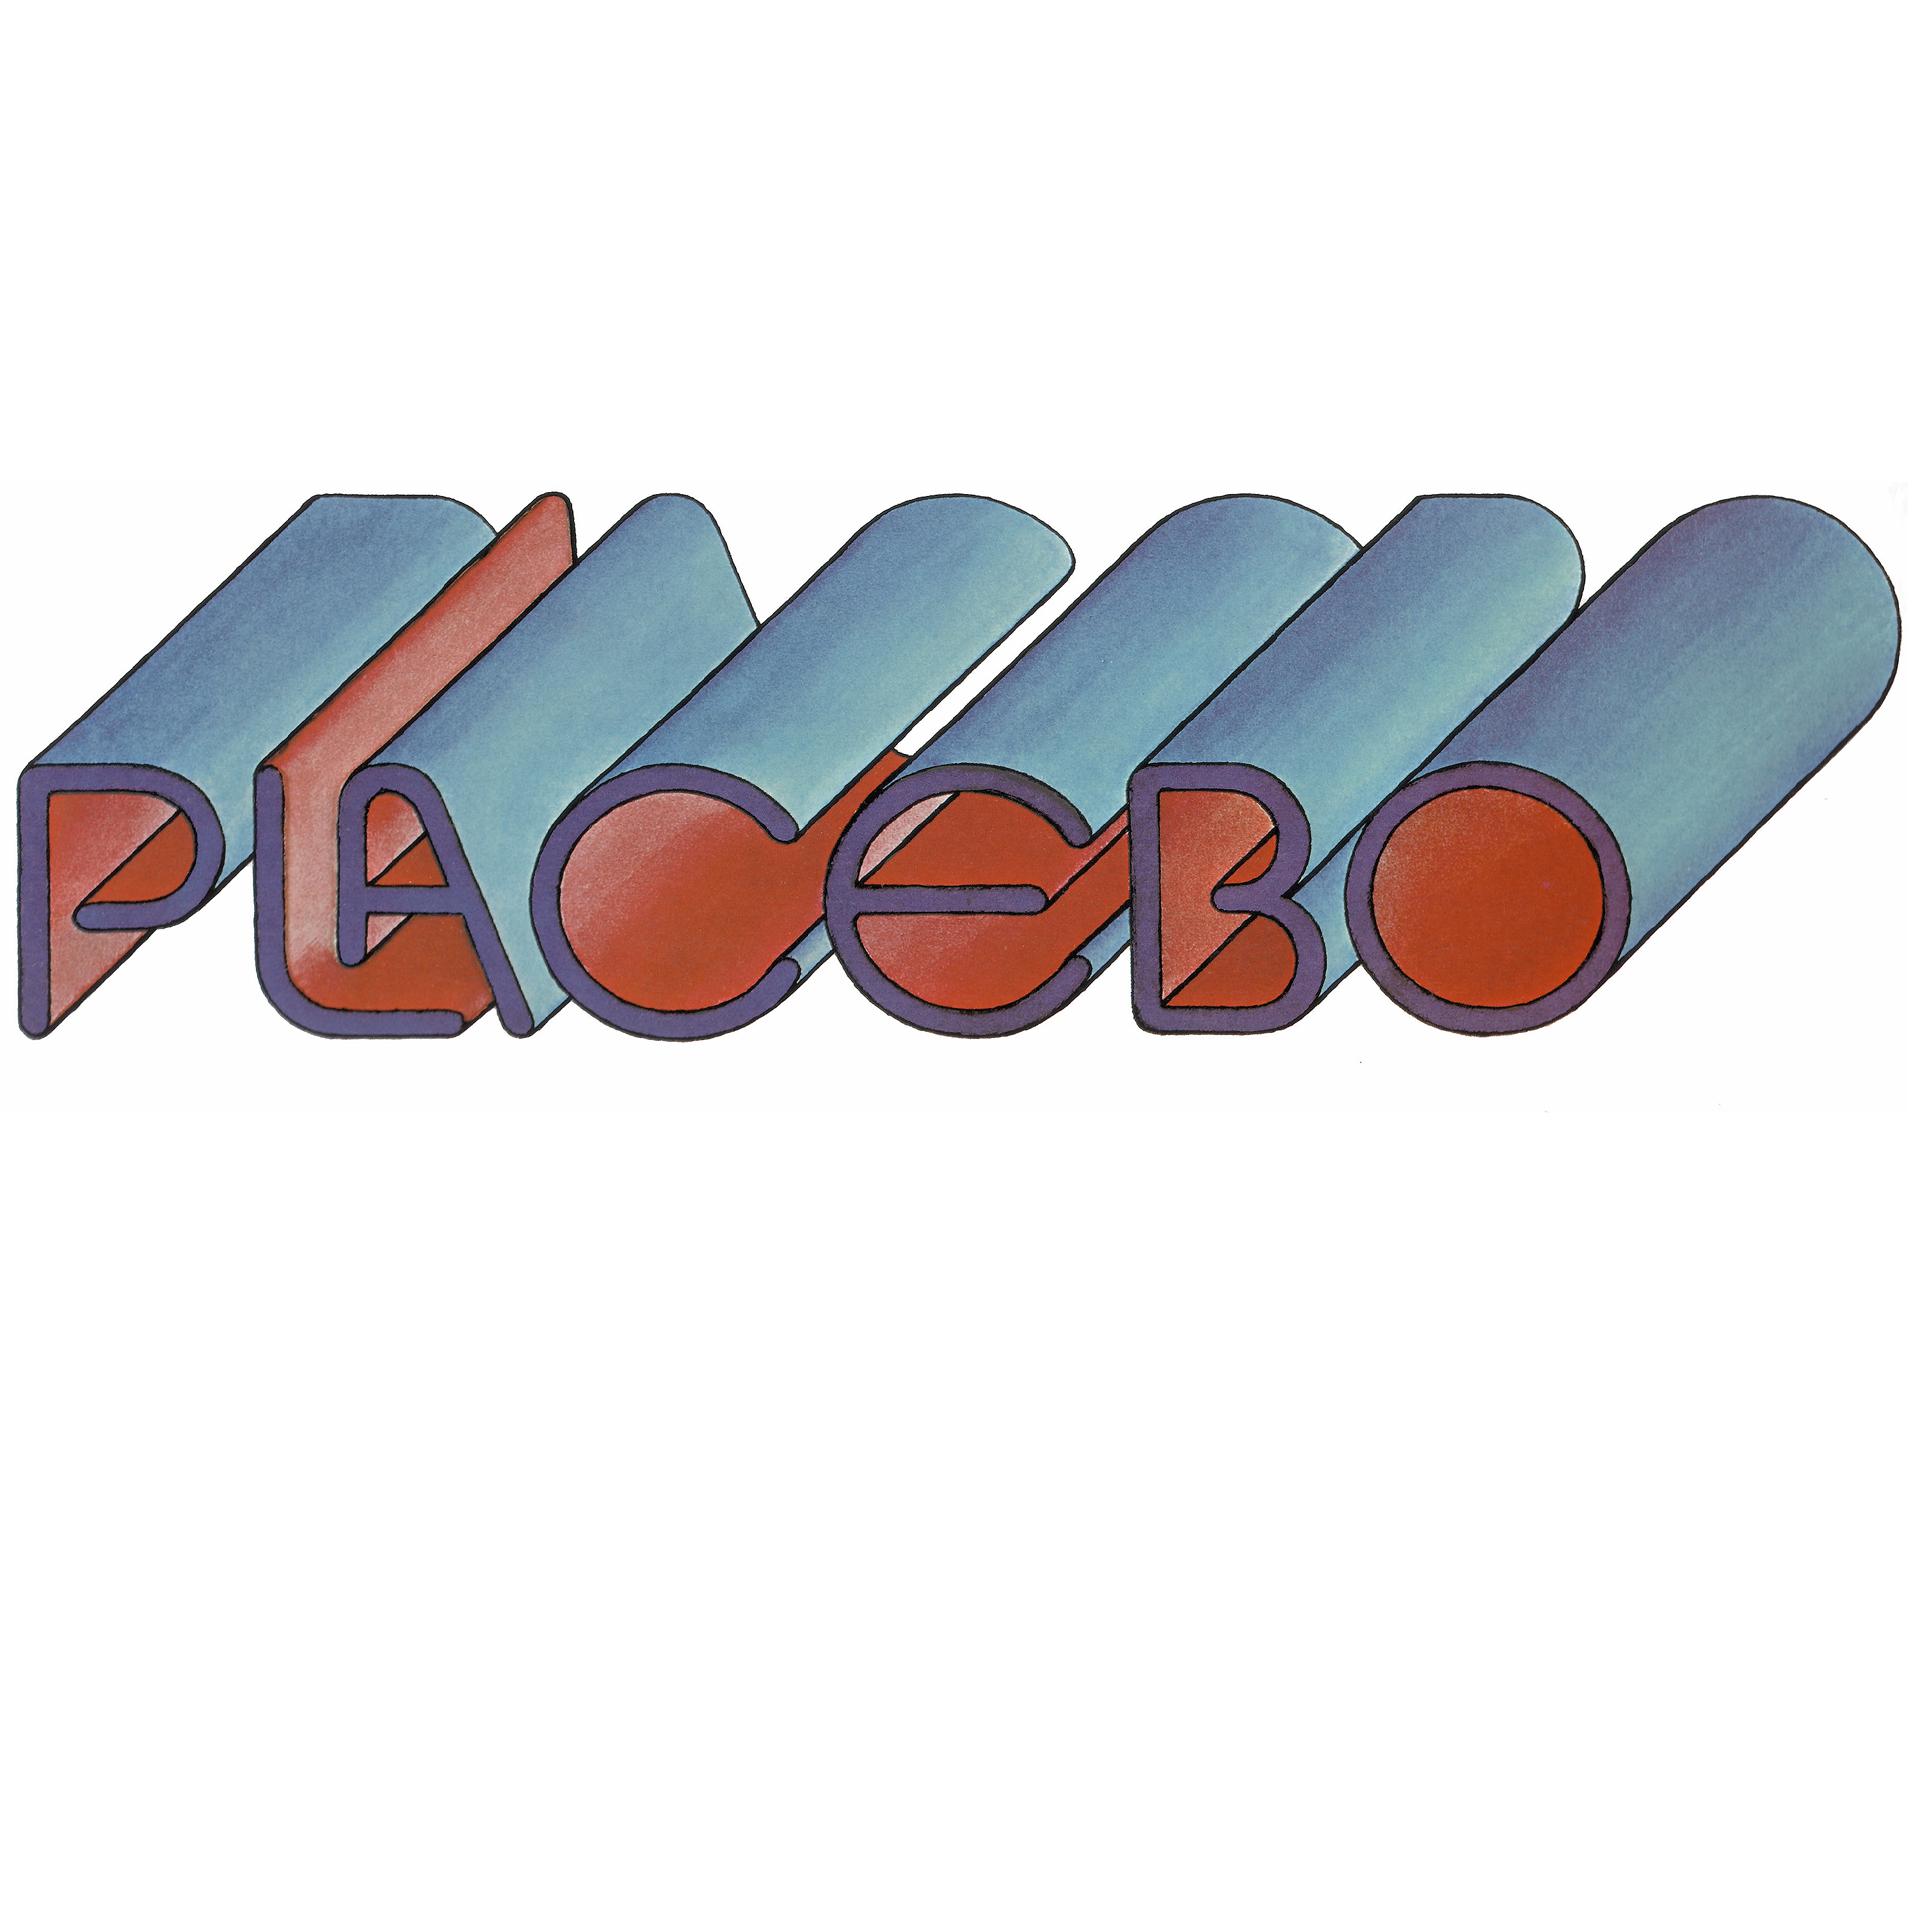 Placebo - фото